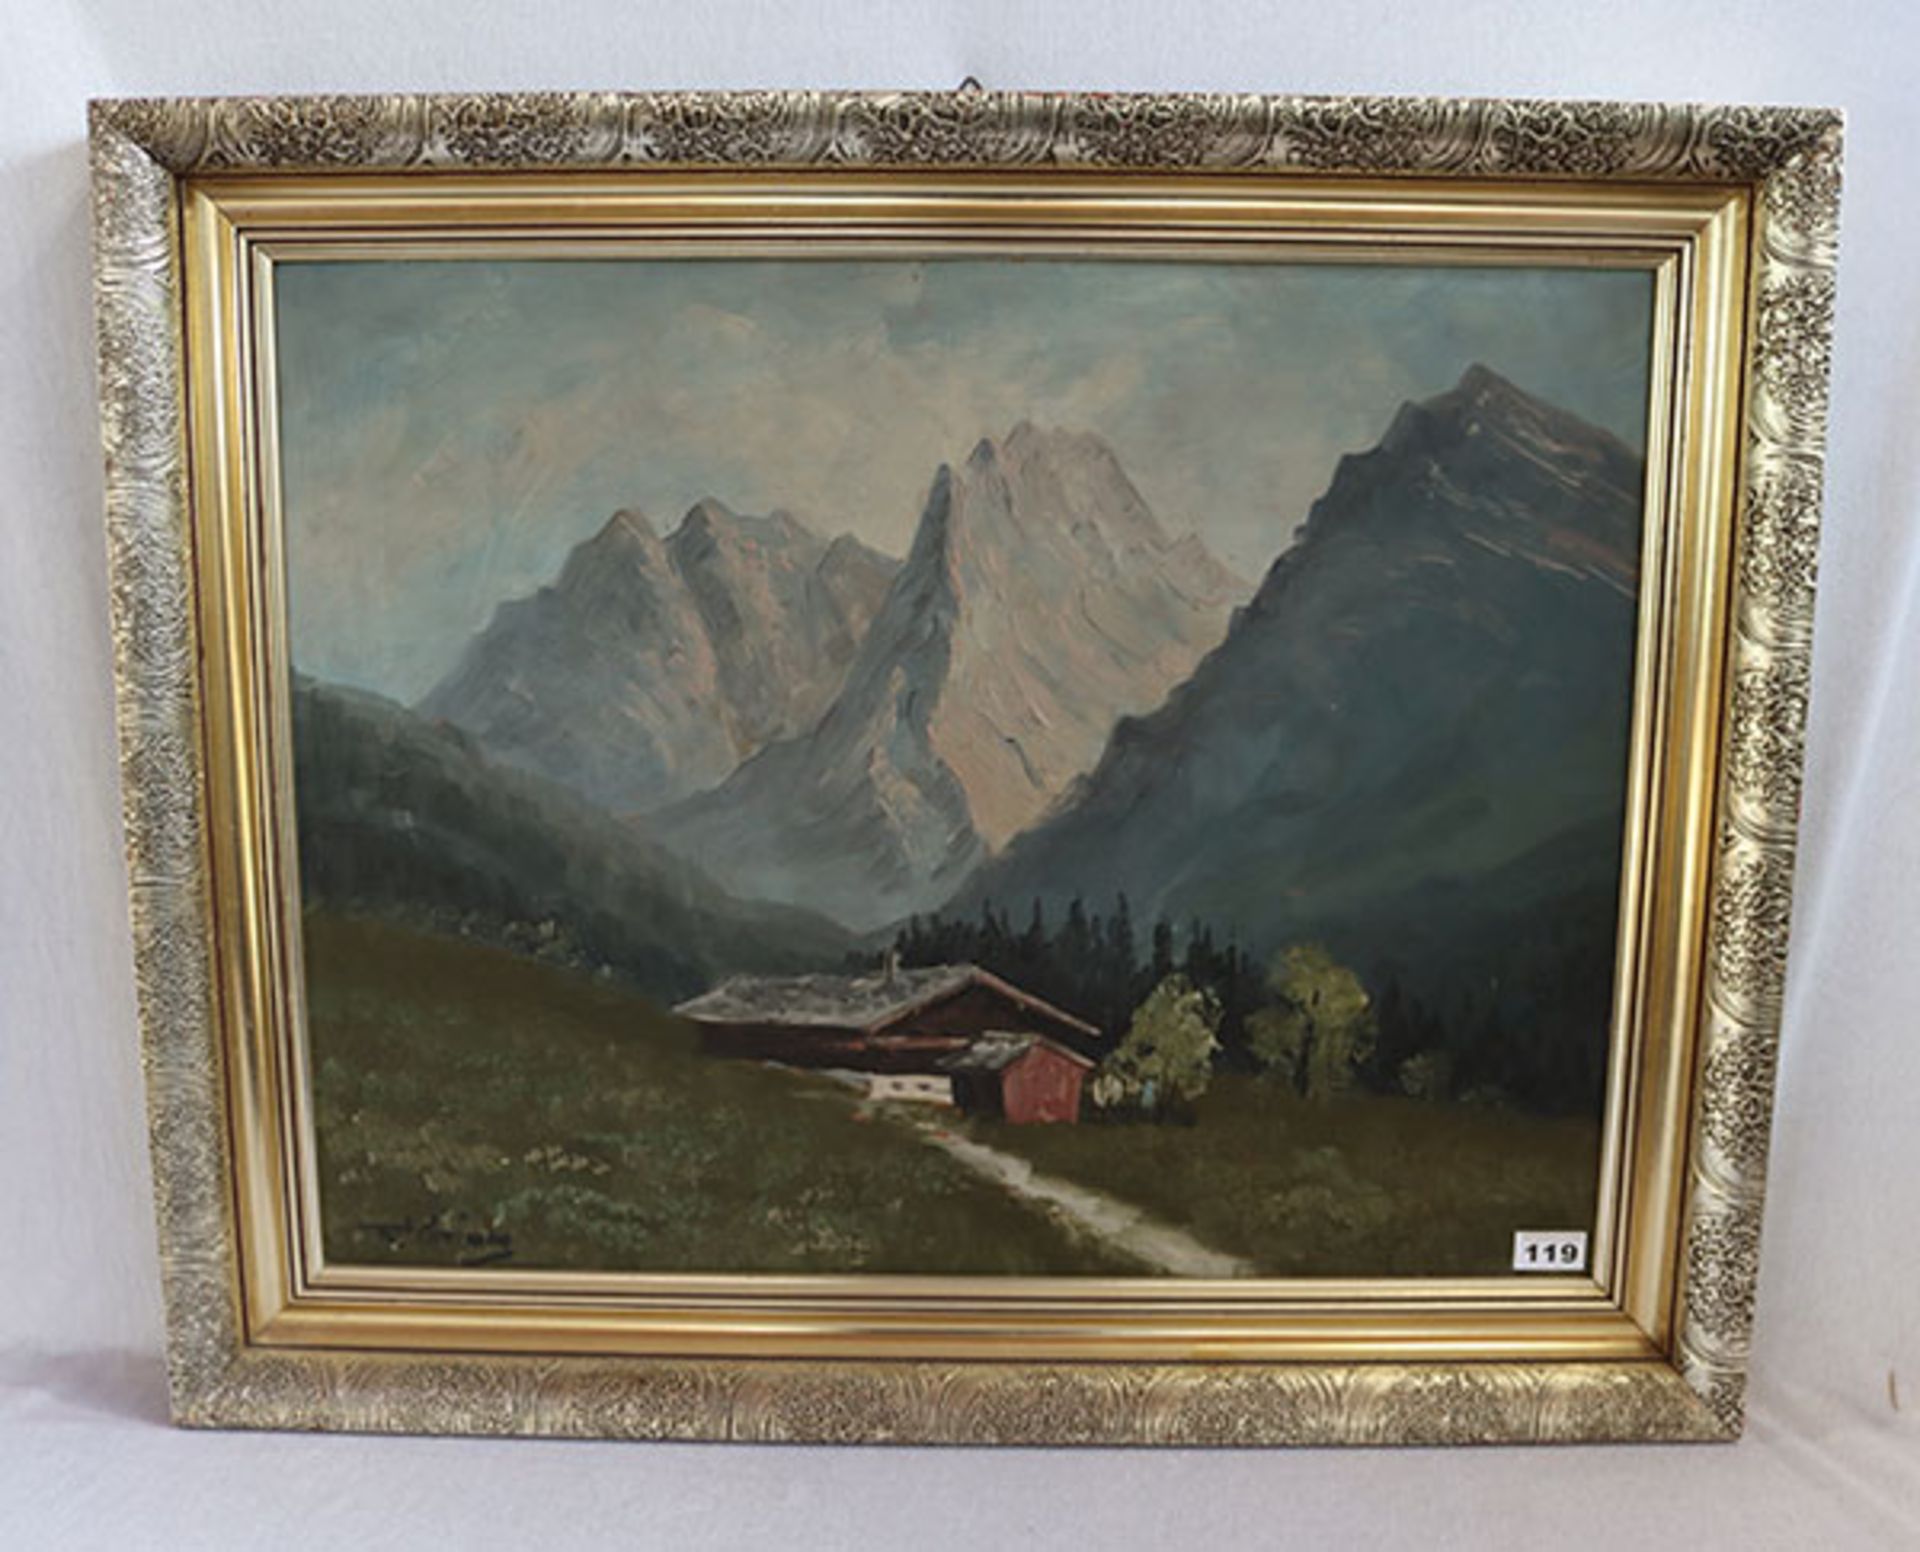 Gemälde ÖL/Malkarton 'Hochgebirgs-Szenerie', signiert T. Grimm, gerahmt Rahmen teils berieben, incl.